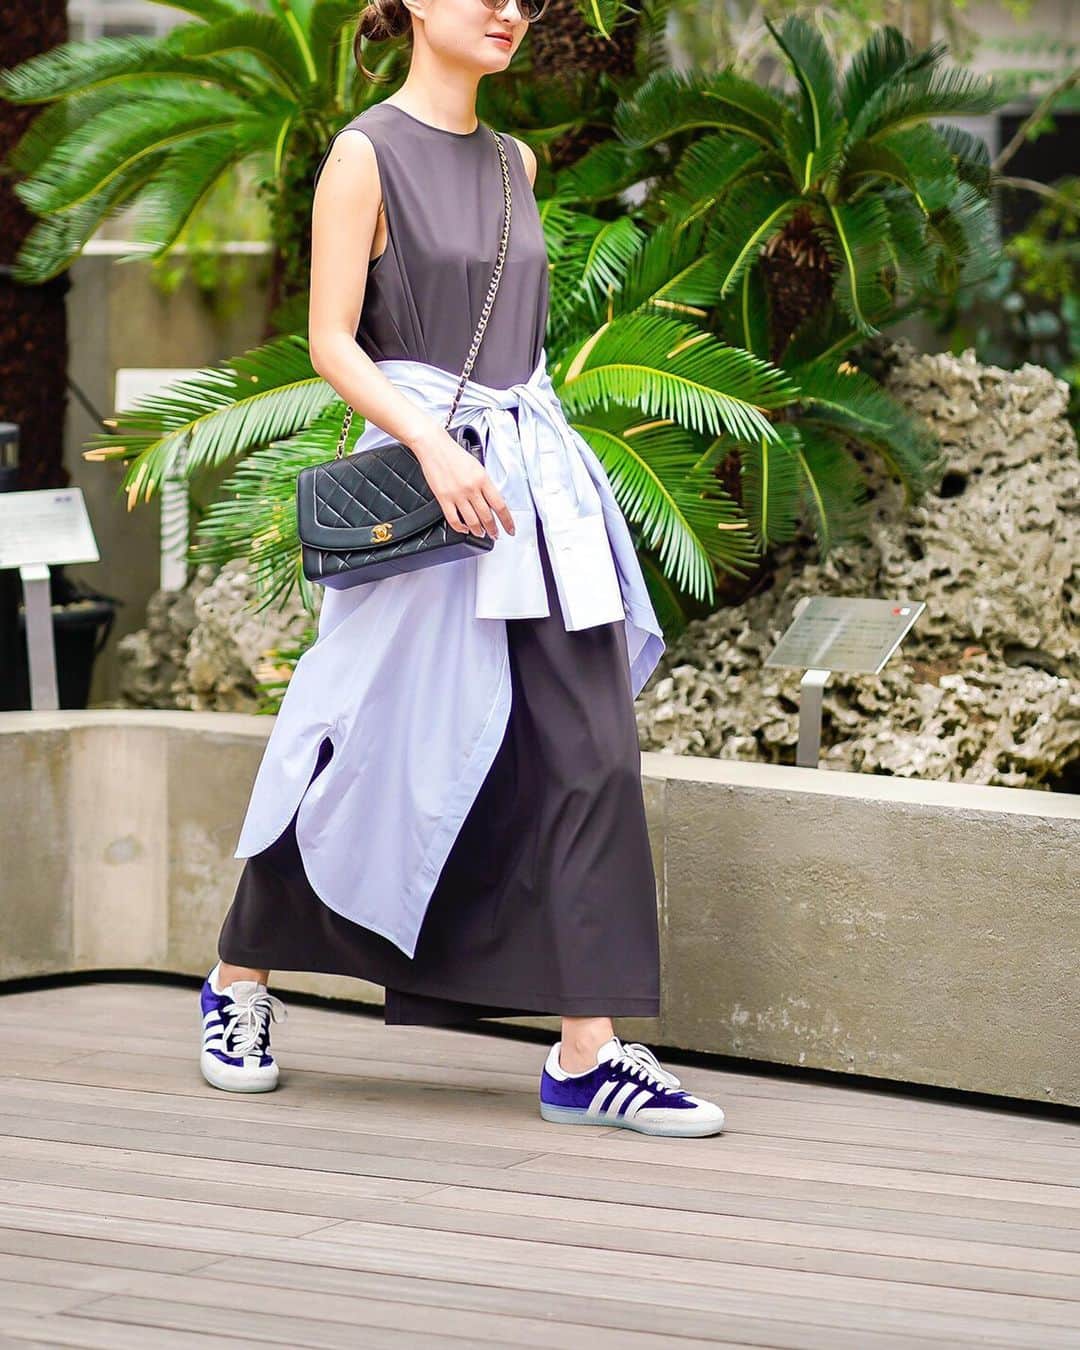 VERMEIL par ienaさんのインスタグラム写真 - (VERMEIL par ienaInstagram)「『夏のレイヤード』 ﻿﻿﻿﻿﻿﻿﻿﻿﻿﻿﻿﻿﻿﻿﻿﻿﻿﻿﻿﻿﻿﻿﻿﻿﻿﻿﻿﻿﻿﻿﻿﻿﻿﻿﻿﻿﻿﻿﻿﻿﻿﻿﻿﻿﻿﻿﻿﻿﻿﻿﻿﻿﻿﻿﻿﻿﻿﻿﻿﻿﻿ ﻿﻿﻿﻿﻿﻿﻿﻿﻿﻿﻿﻿﻿﻿ ﻿﻿﻿﻿﻿﻿﻿﻿﻿﻿﻿﻿﻿★5/31 Sat発売‼︎★﻿ 梅雨どきも快適に‼︎﻿ ﻿﻿﻿ ﻿﻿﻿﻿ ﻿﻿﻿﻿﻿﻿﻿﻿﻿﻿﻿Dress: 21,000yen+tax / VERMEIL par iena﻿﻿﻿﻿ Shirt: 18,000yen+tax / VERMEIL par iena﻿﻿﻿﻿﻿﻿ Shoes: 13,000yen+tax / adidas﻿ㅤㅤㅤ﻿ ﻿﻿ ﻿﻿﻿﻿﻿﻿﻿﻿﻿﻿﻿﻿﻿﻿﻿﻿﻿﻿﻿﻿﻿﻿﻿﻿﻿﻿﻿﻿﻿﻿﻿﻿﻿﻿﻿﻿﻿﻿ ﻿ ﻿﻿﻿﻿﻿﻿ ﻿ㅤㅤㅤ﻿﻿﻿ ﻿﻿﻿ @adidas  ㅤ﻿ㅤㅤㅤㅤㅤㅤㅤㅤㅤ﻿﻿﻿﻿﻿﻿﻿﻿﻿﻿﻿﻿﻿﻿﻿﻿﻿﻿﻿﻿﻿﻿﻿﻿﻿﻿﻿﻿﻿﻿﻿﻿﻿﻿﻿﻿﻿﻿﻿﻿﻿﻿﻿﻿﻿﻿﻿﻿﻿﻿﻿﻿﻿﻿﻿﻿ #vermeilpariena #iena ﻿﻿﻿﻿﻿﻿﻿﻿﻿﻿﻿﻿﻿﻿﻿﻿﻿﻿﻿﻿﻿﻿﻿﻿﻿﻿﻿﻿﻿﻿﻿﻿﻿﻿﻿﻿﻿﻿﻿﻿﻿﻿﻿﻿﻿﻿﻿﻿﻿﻿﻿﻿﻿﻿﻿﻿﻿﻿﻿﻿﻿ #2019ss #newin﻿﻿﻿﻿ #vintage ﻿﻿﻿﻿﻿﻿﻿﻿﻿﻿﻿﻿﻿﻿﻿﻿﻿﻿﻿﻿﻿﻿ #ヴェルメイユパーイエナ #イエナ ﻿﻿﻿﻿﻿﻿﻿﻿﻿﻿﻿﻿﻿﻿﻿﻿﻿﻿﻿﻿﻿﻿﻿﻿﻿﻿﻿﻿﻿﻿﻿﻿﻿﻿﻿﻿﻿﻿﻿﻿﻿﻿﻿﻿﻿﻿﻿﻿﻿﻿﻿﻿﻿﻿﻿﻿﻿﻿﻿﻿ #新入荷 #スニーカースタイル﻿﻿ #ジャージーワンピース #旅」5月30日 6時43分 - vermeilpariena